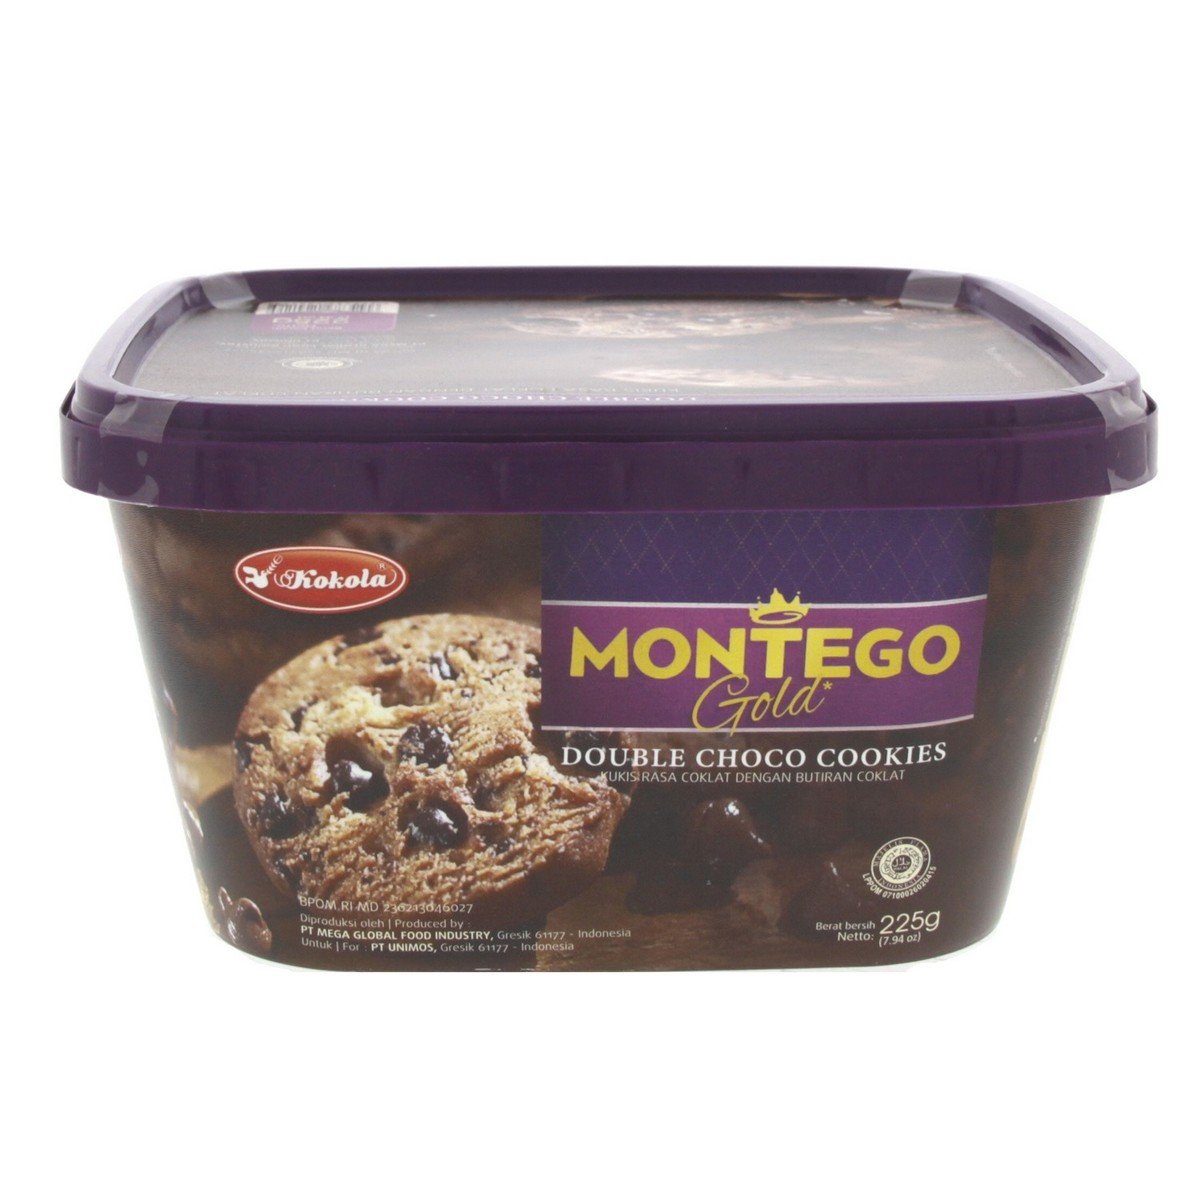 Kokola Montego Gold Double Choco Cookies 225 g